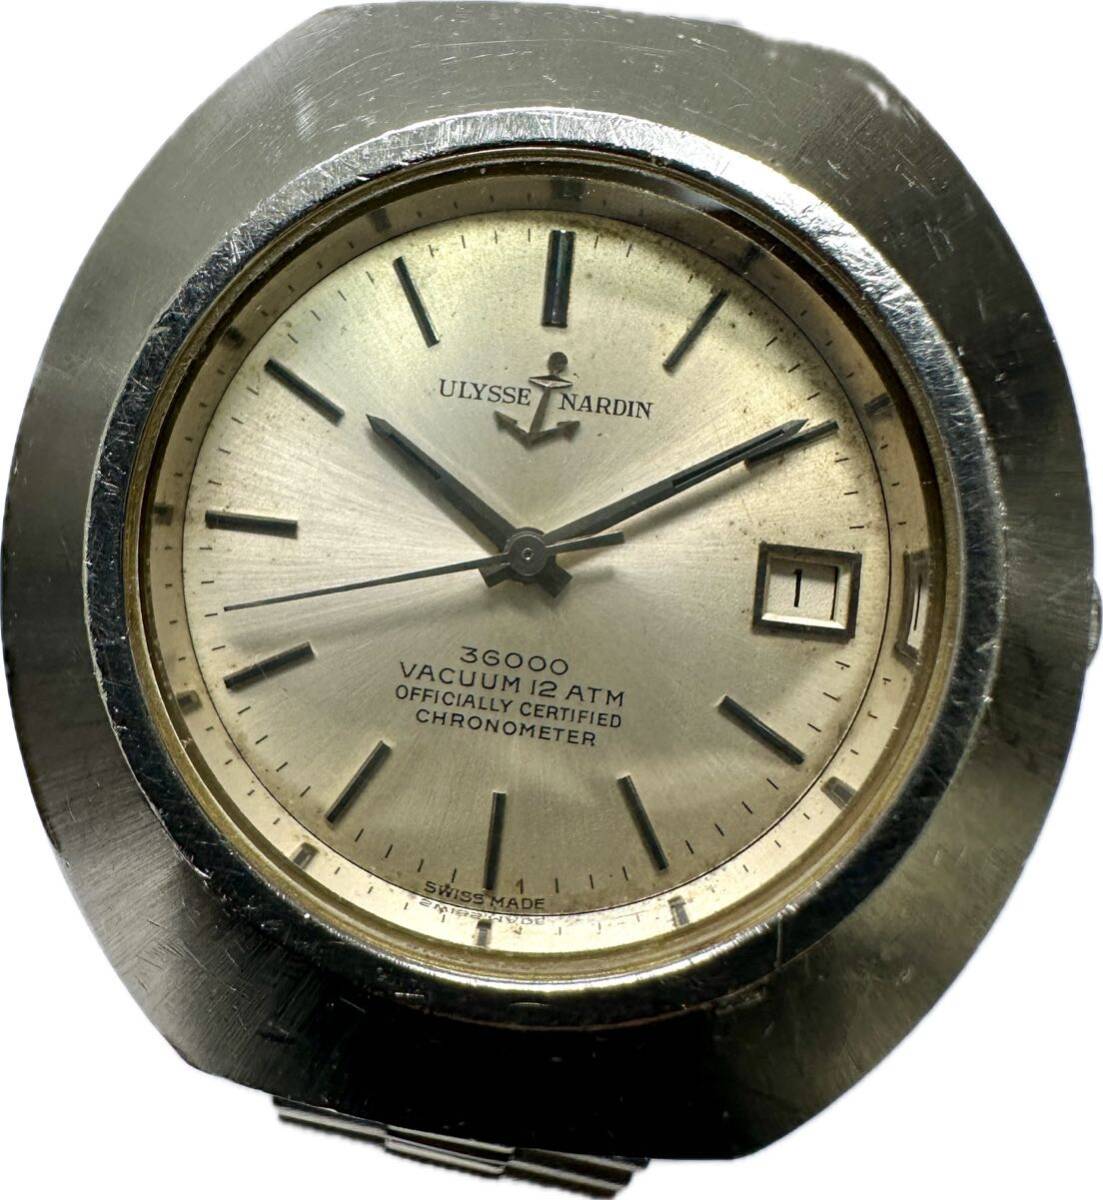 1 jpy ~ Y rare rare Ulysse Nardin vacuum 36000 Chrono meter Fujitsubo men's self-winding watch Date antique clock 62251466